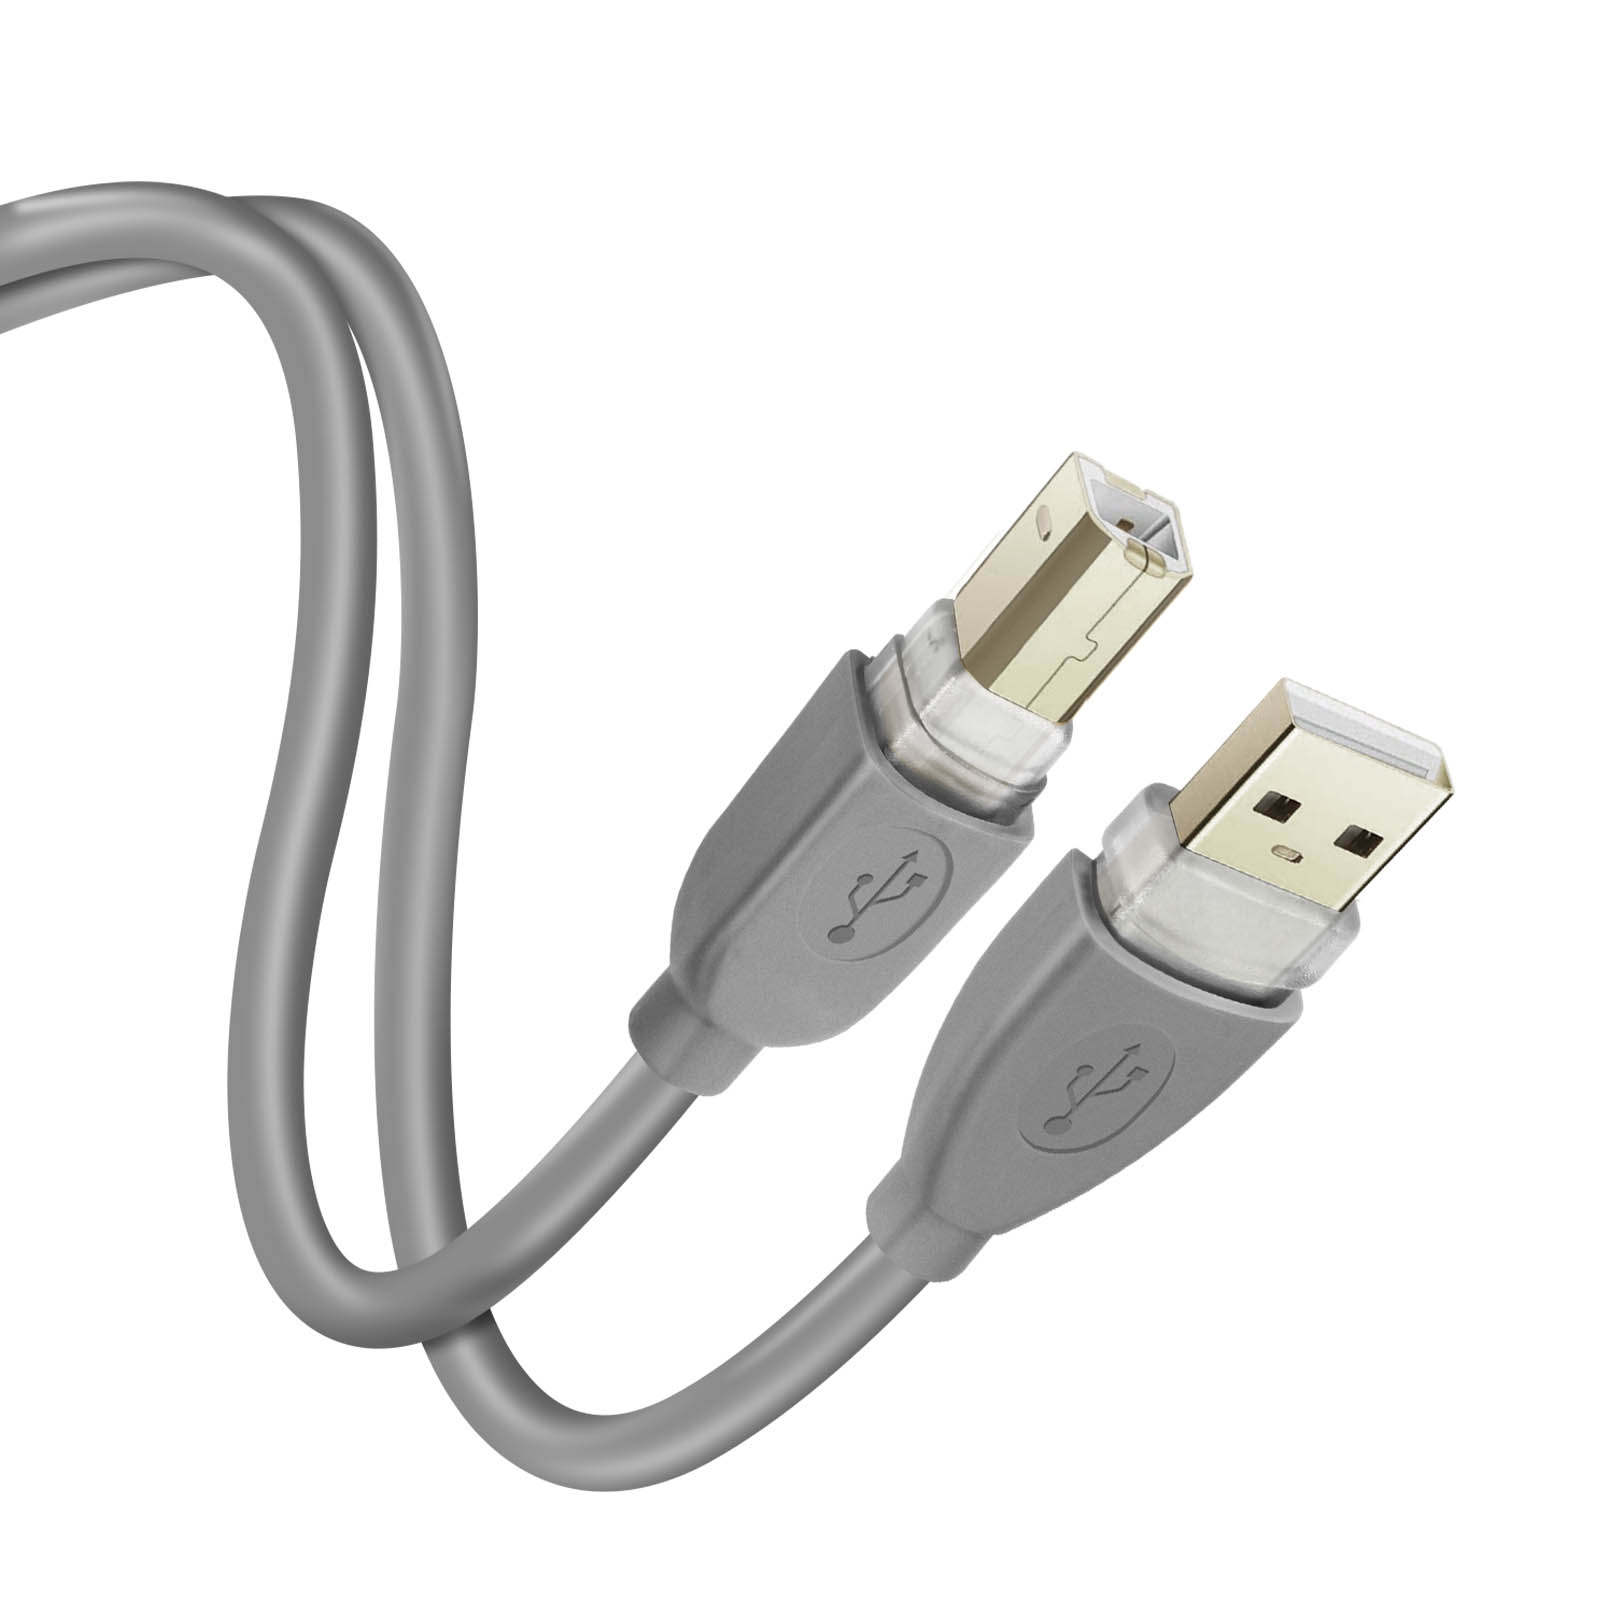 LINQ USB 2.0 A/USB Druckerkabel, m B 3m, Druckerkabel, 3 2.0